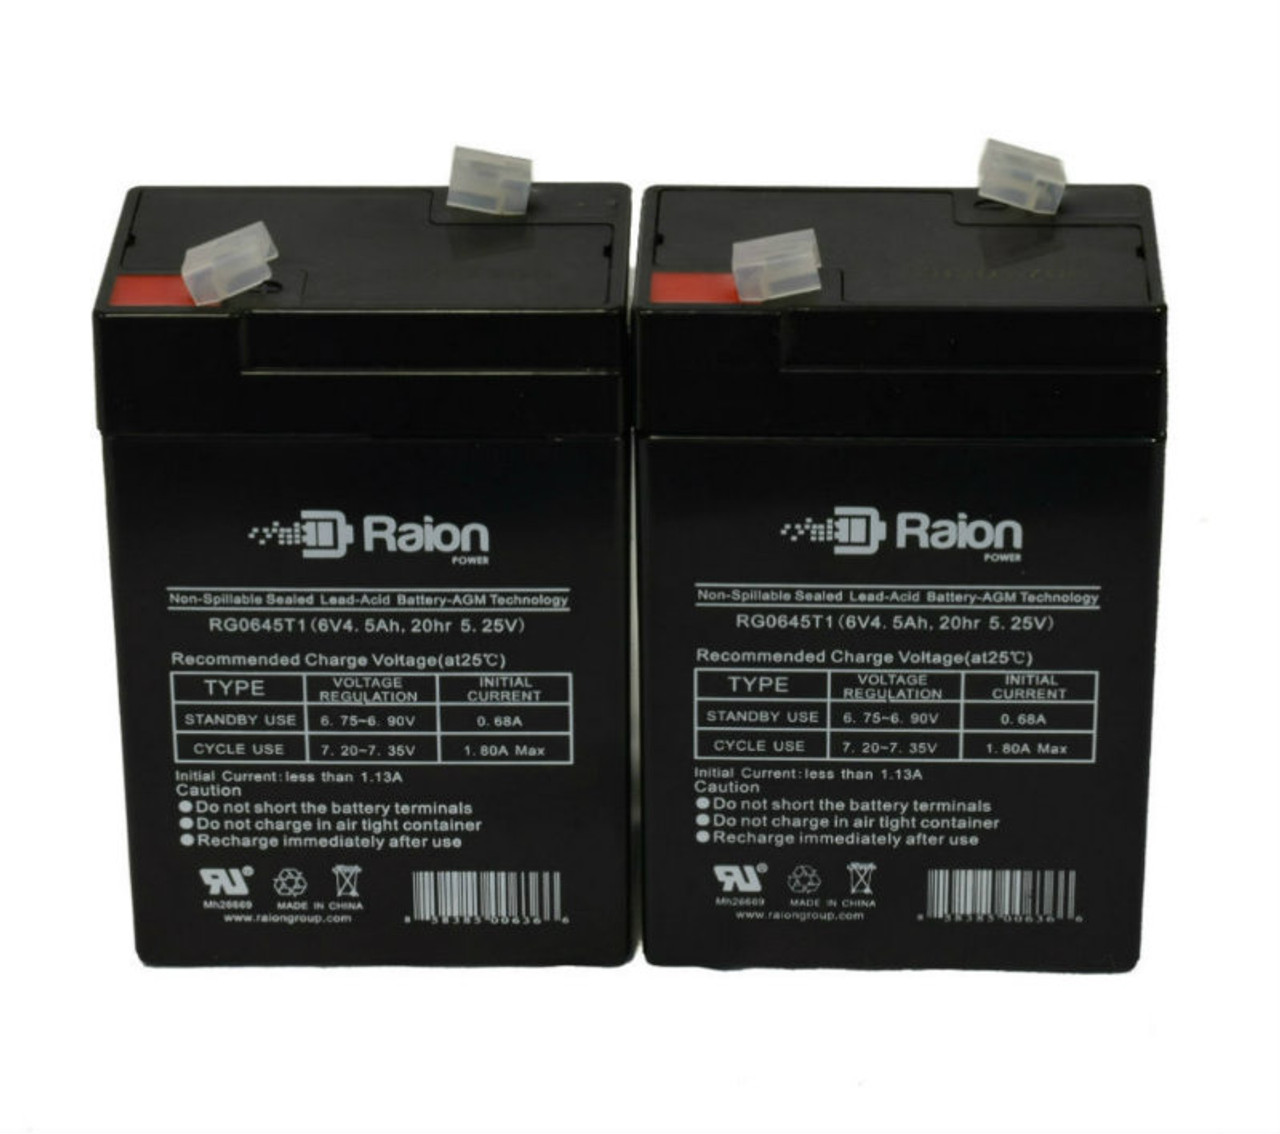 Raion Power 6V 4.5Ah Replacement Emergency Light Battery for Dual-Lite EPP - 2 Pack